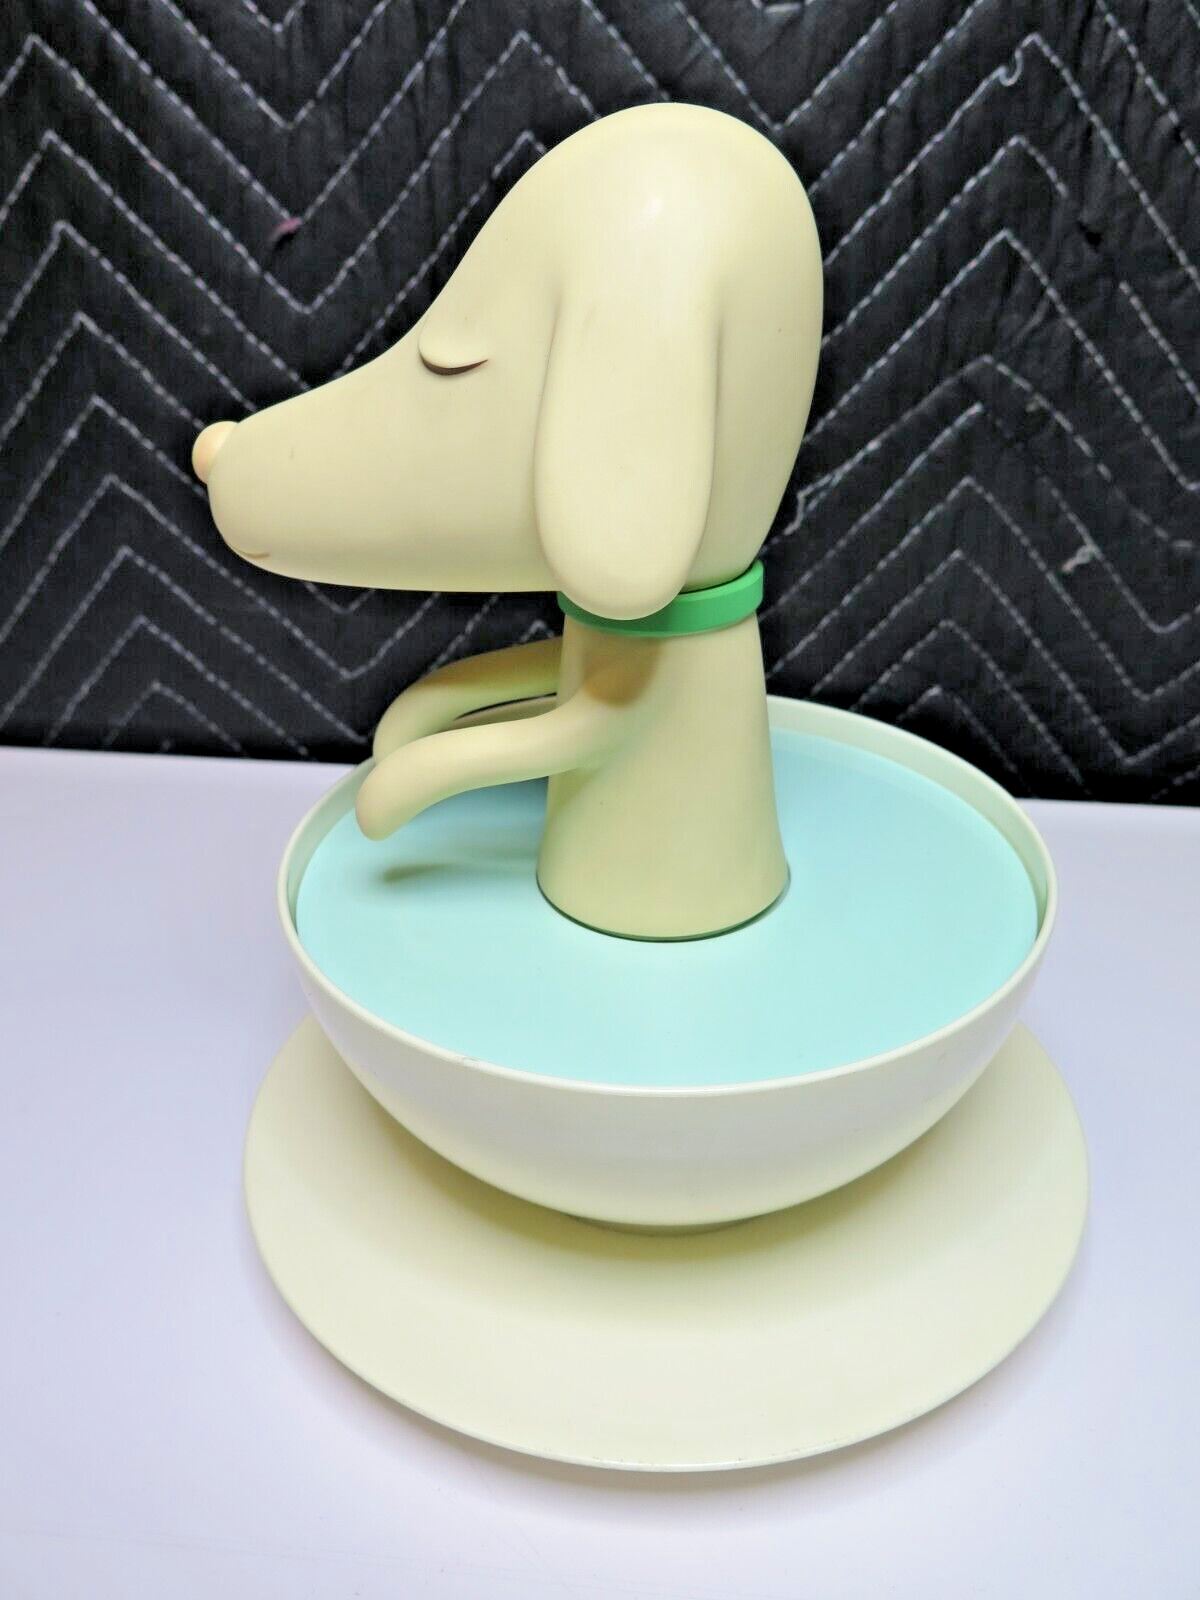 Yoshitomo Nara Pup Cup Urban Vinyl Cerealart Kidrobot Battery Operated RARE